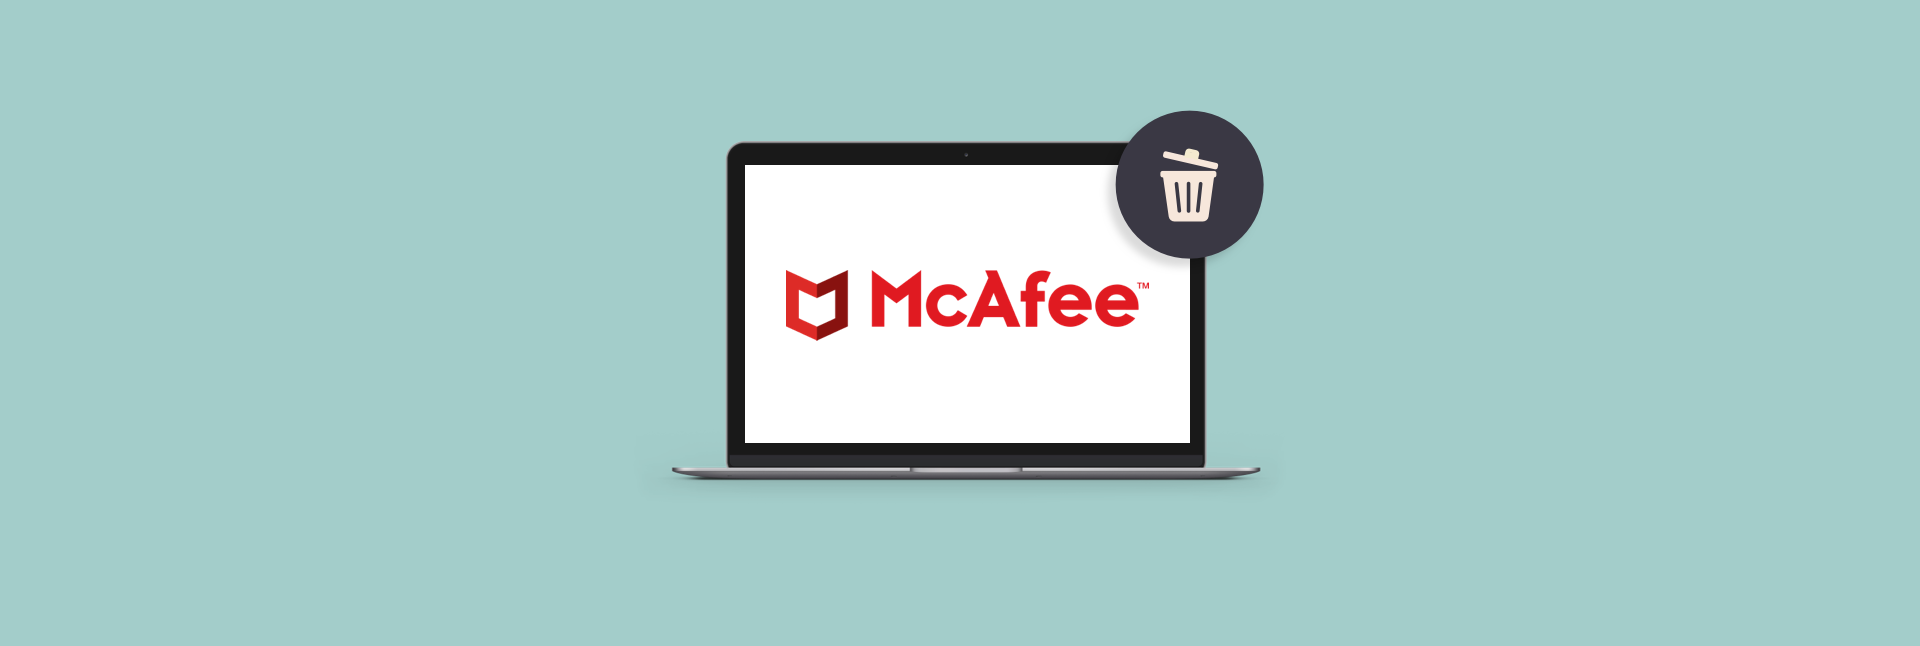 download mcafee antivirus for mac